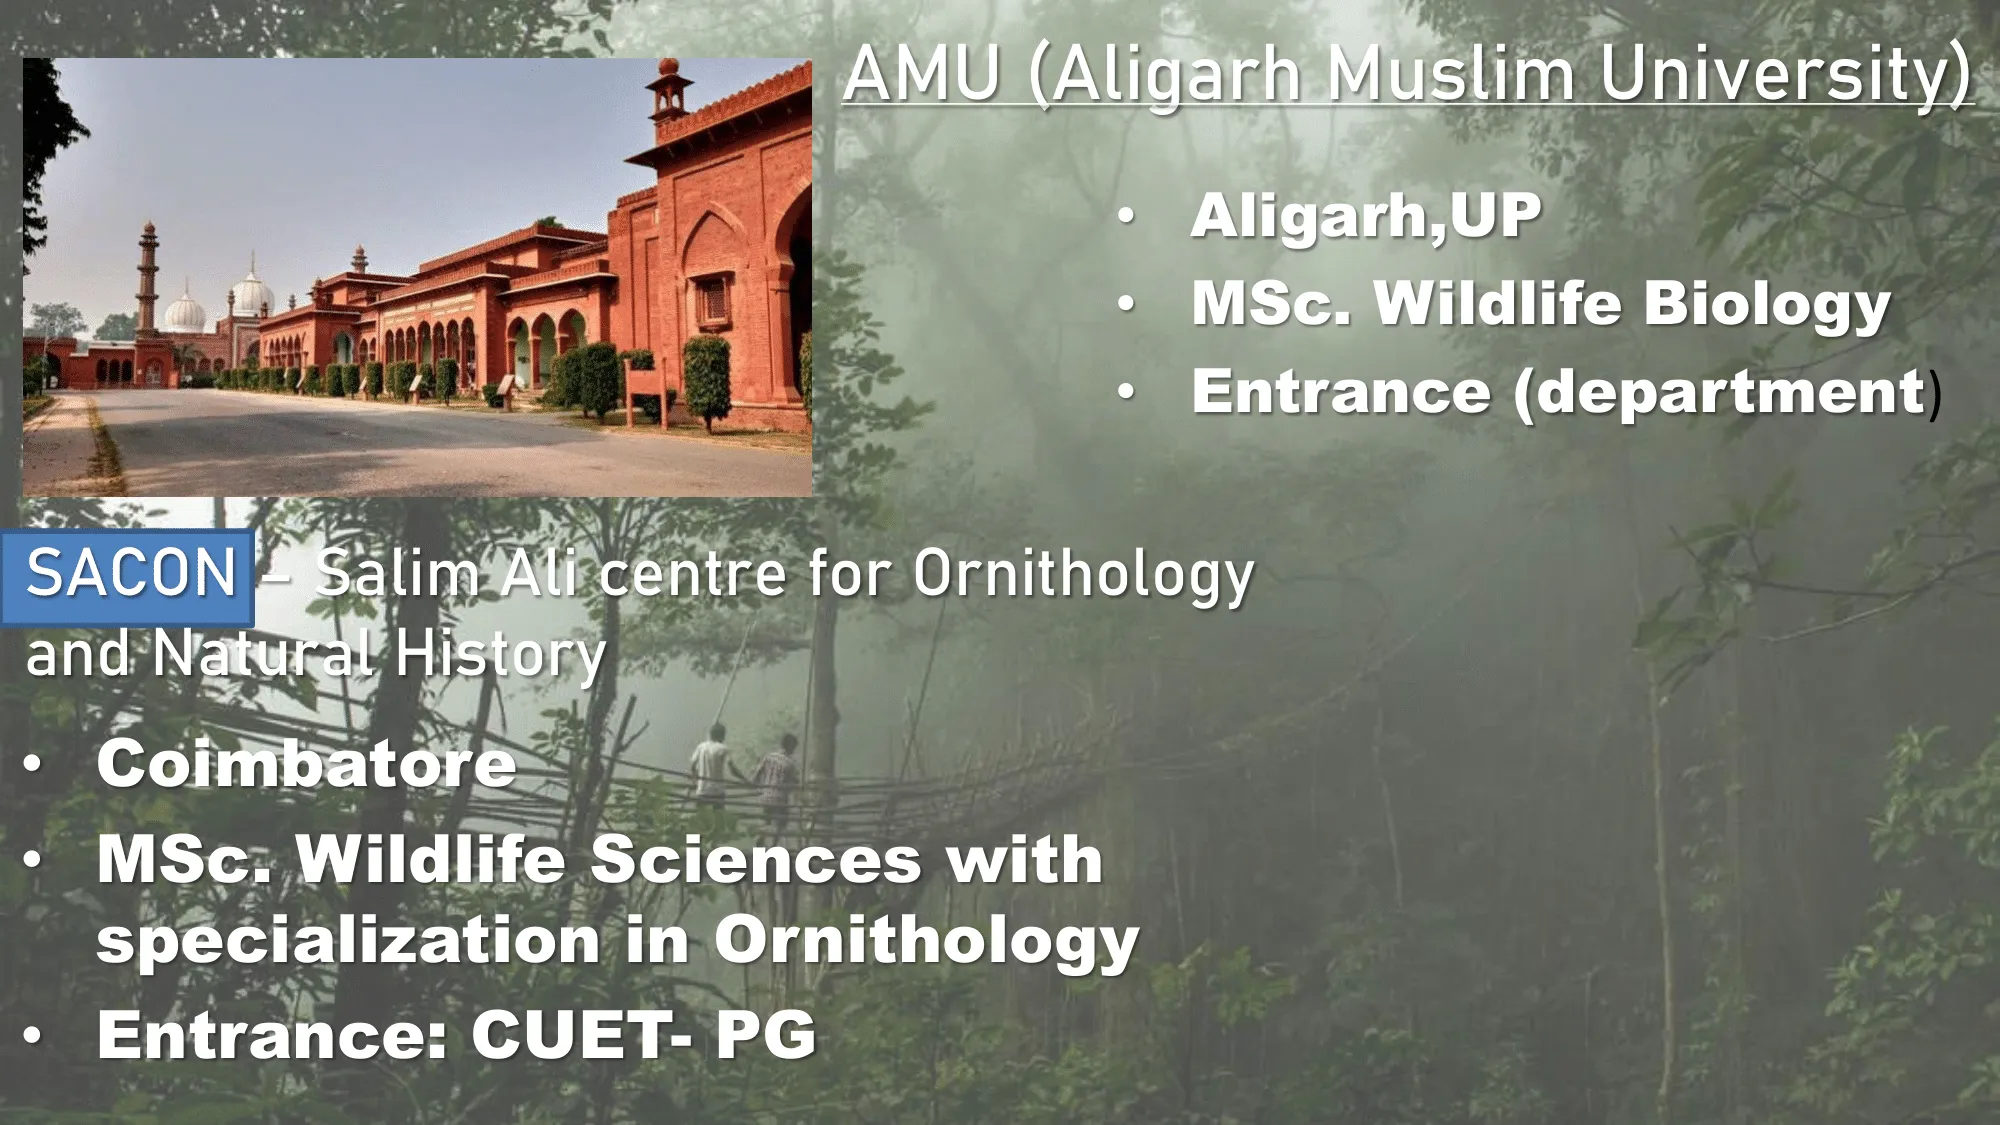 Aligarh Muslim University courses